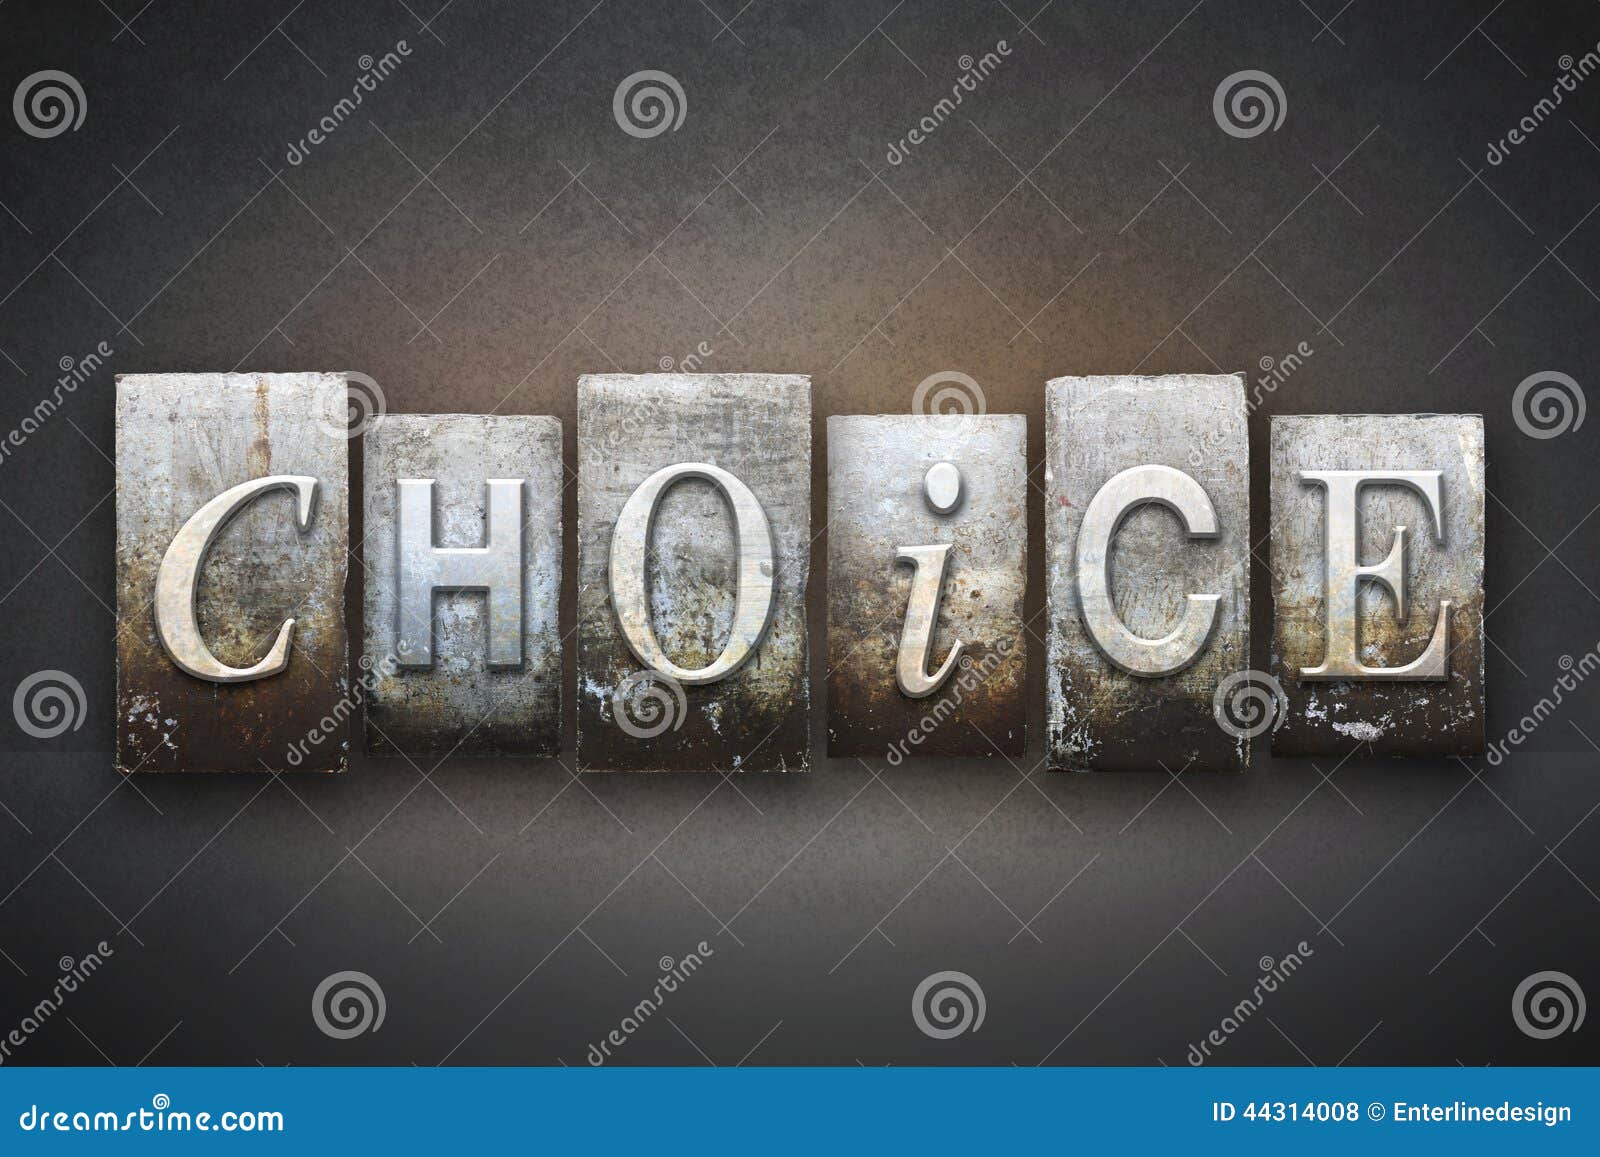 choice letterpress